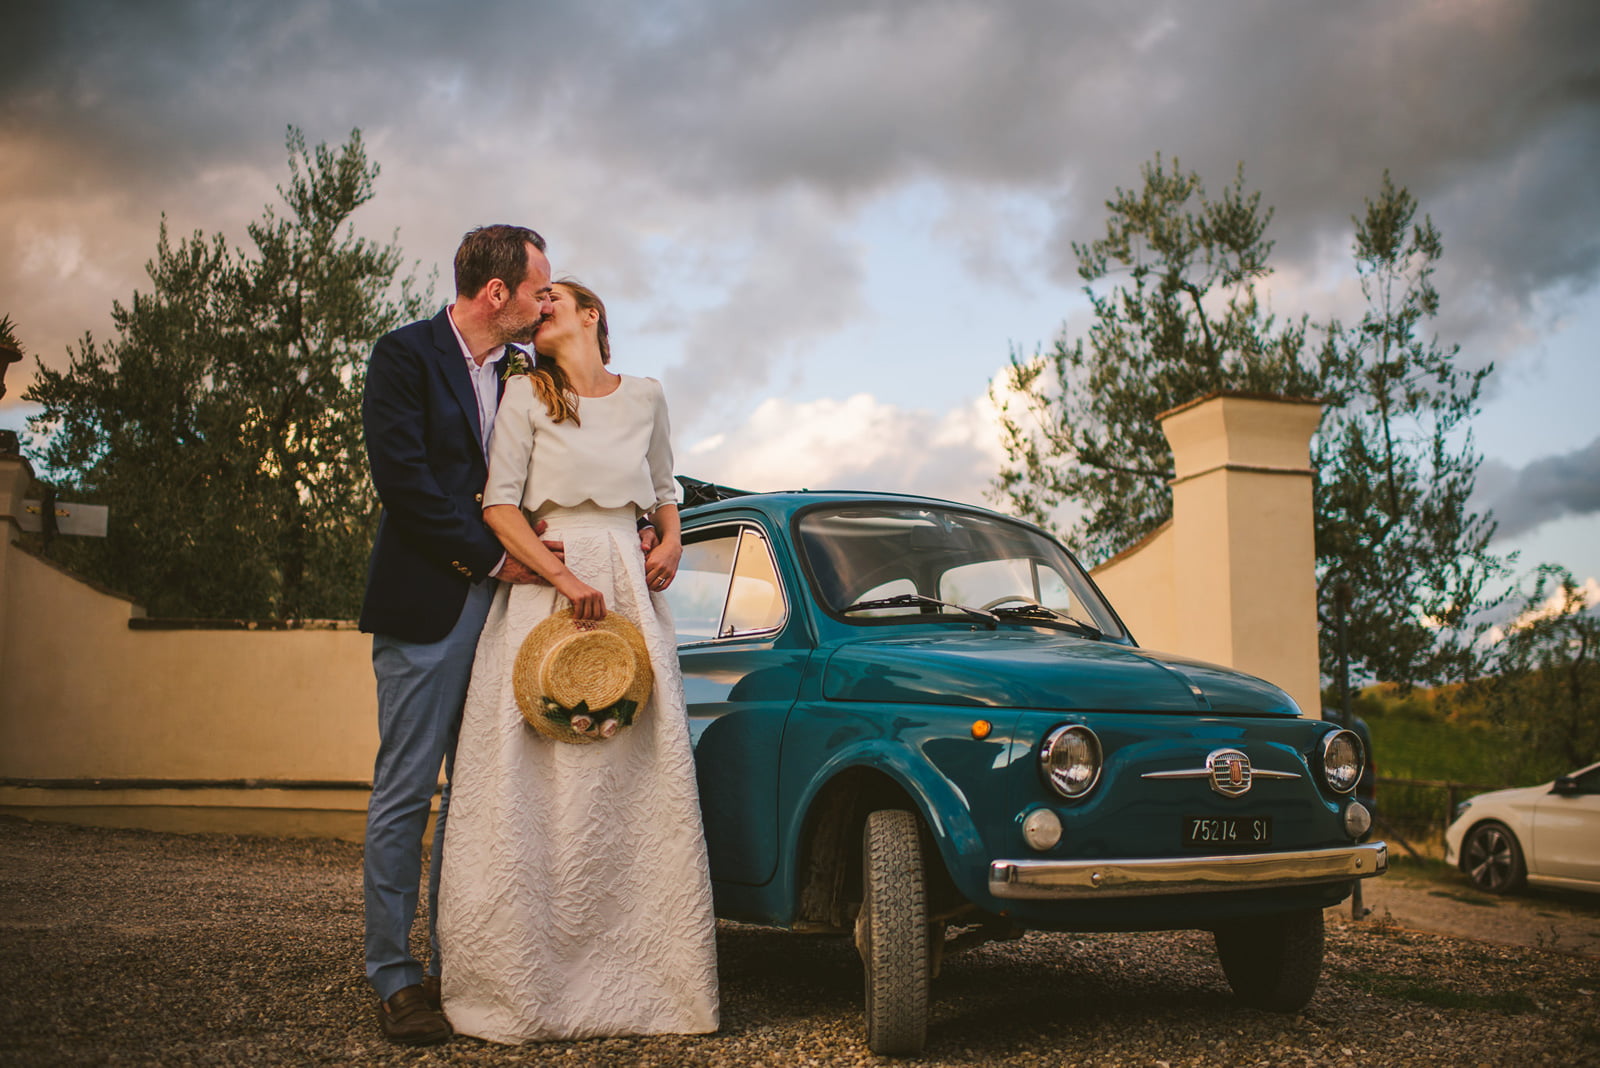 Lovely Wedding in Villa at Rignana by Federico Pannacci Wedding Photographer 87